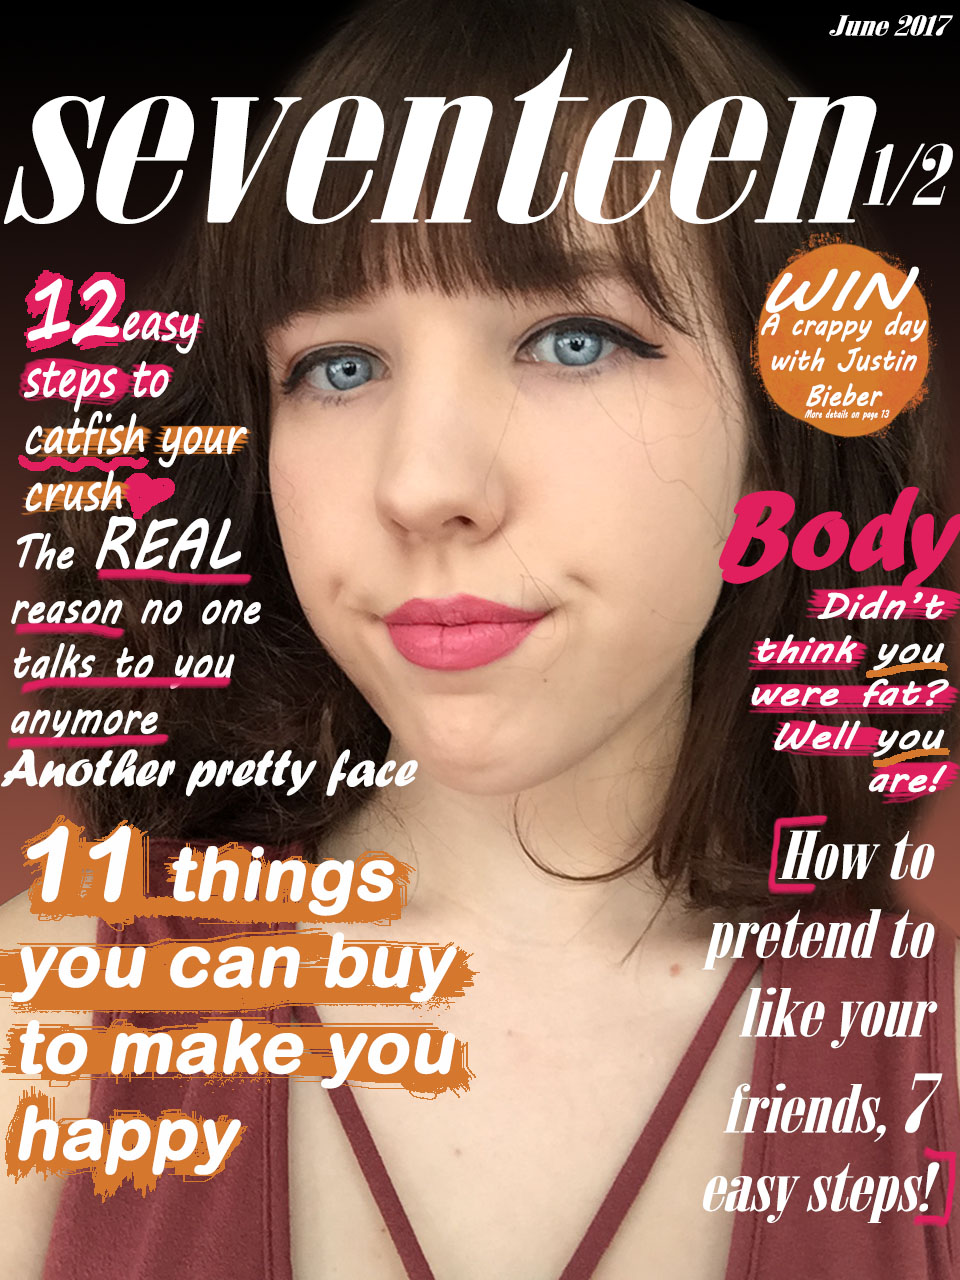 SeventeenMagazineParody2.jpg